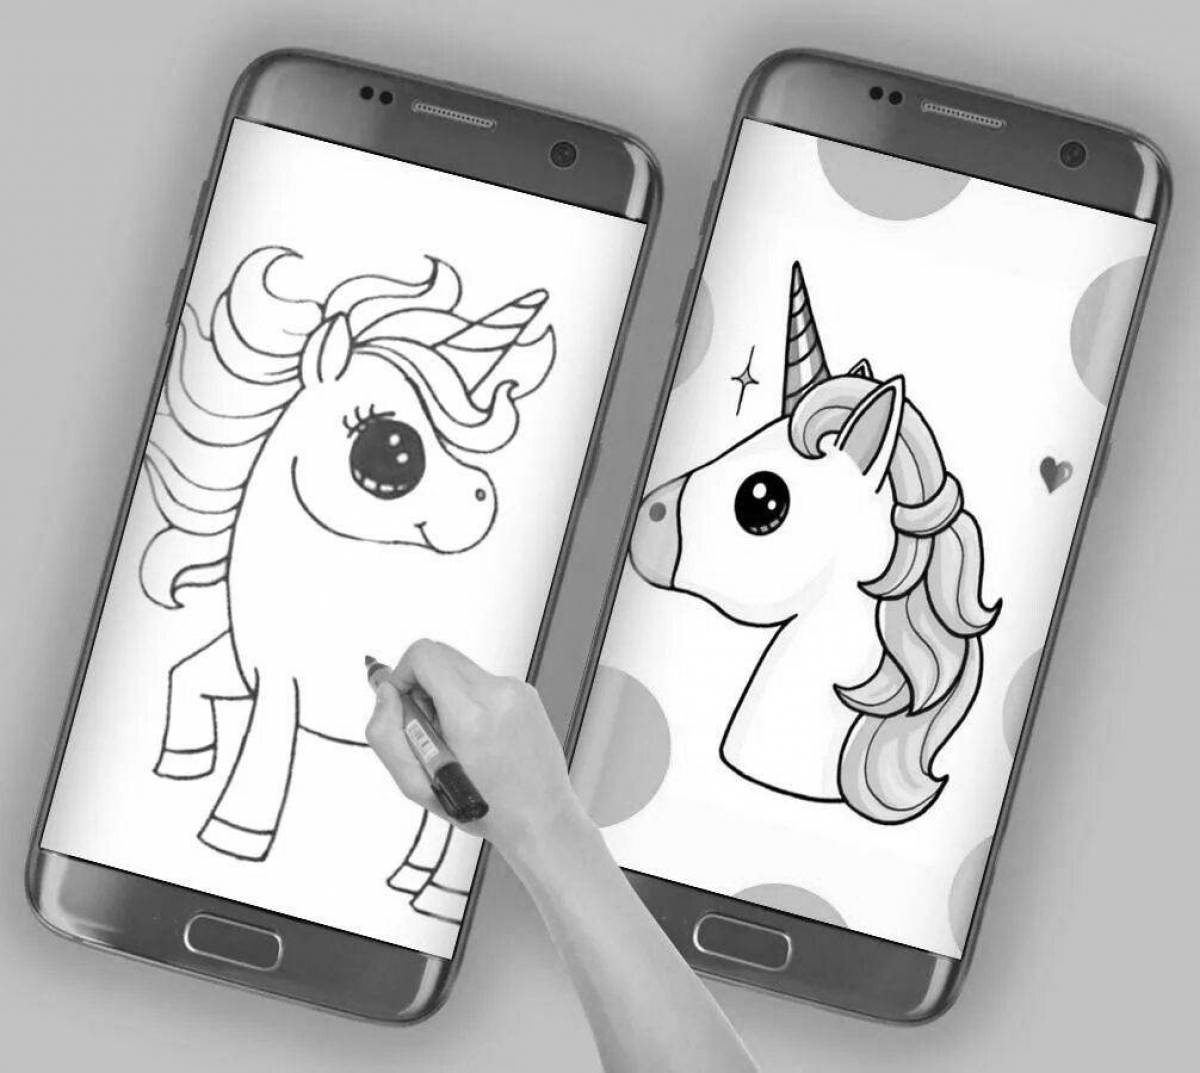 Delightful phone unicorn coloring book